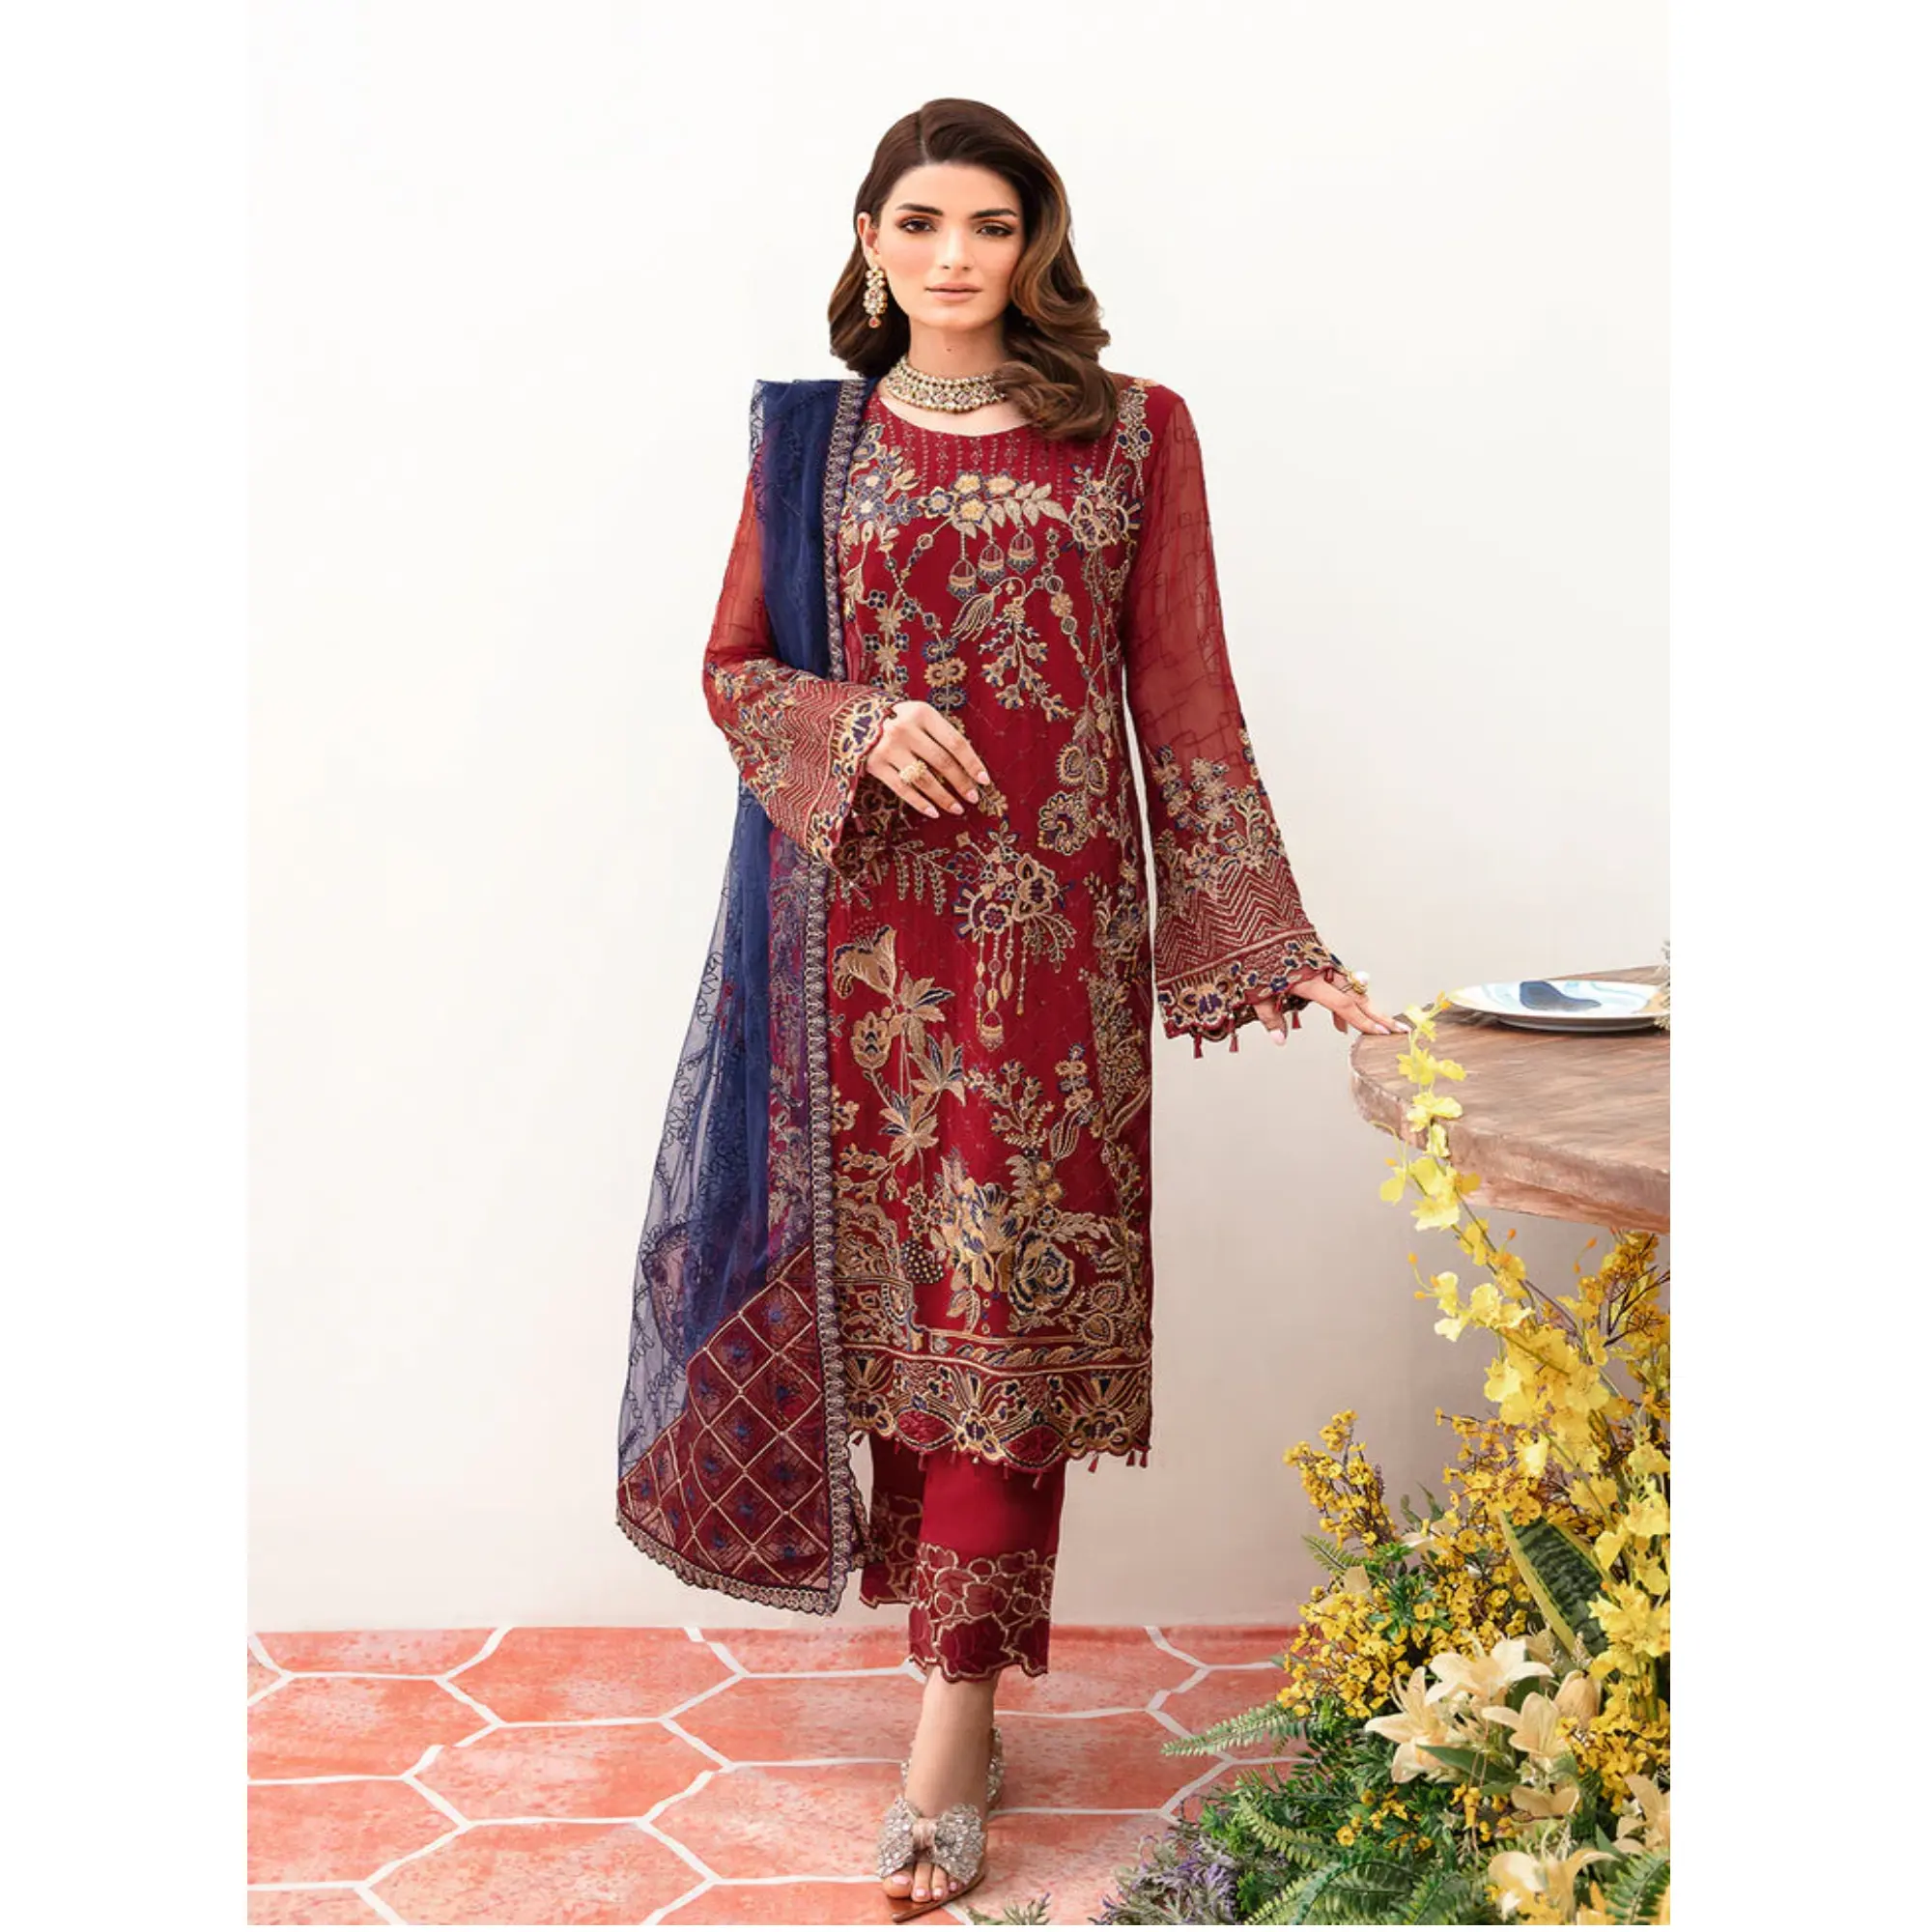 Pakistani style Islamic women suit manufacturer in India Pakistani dresses